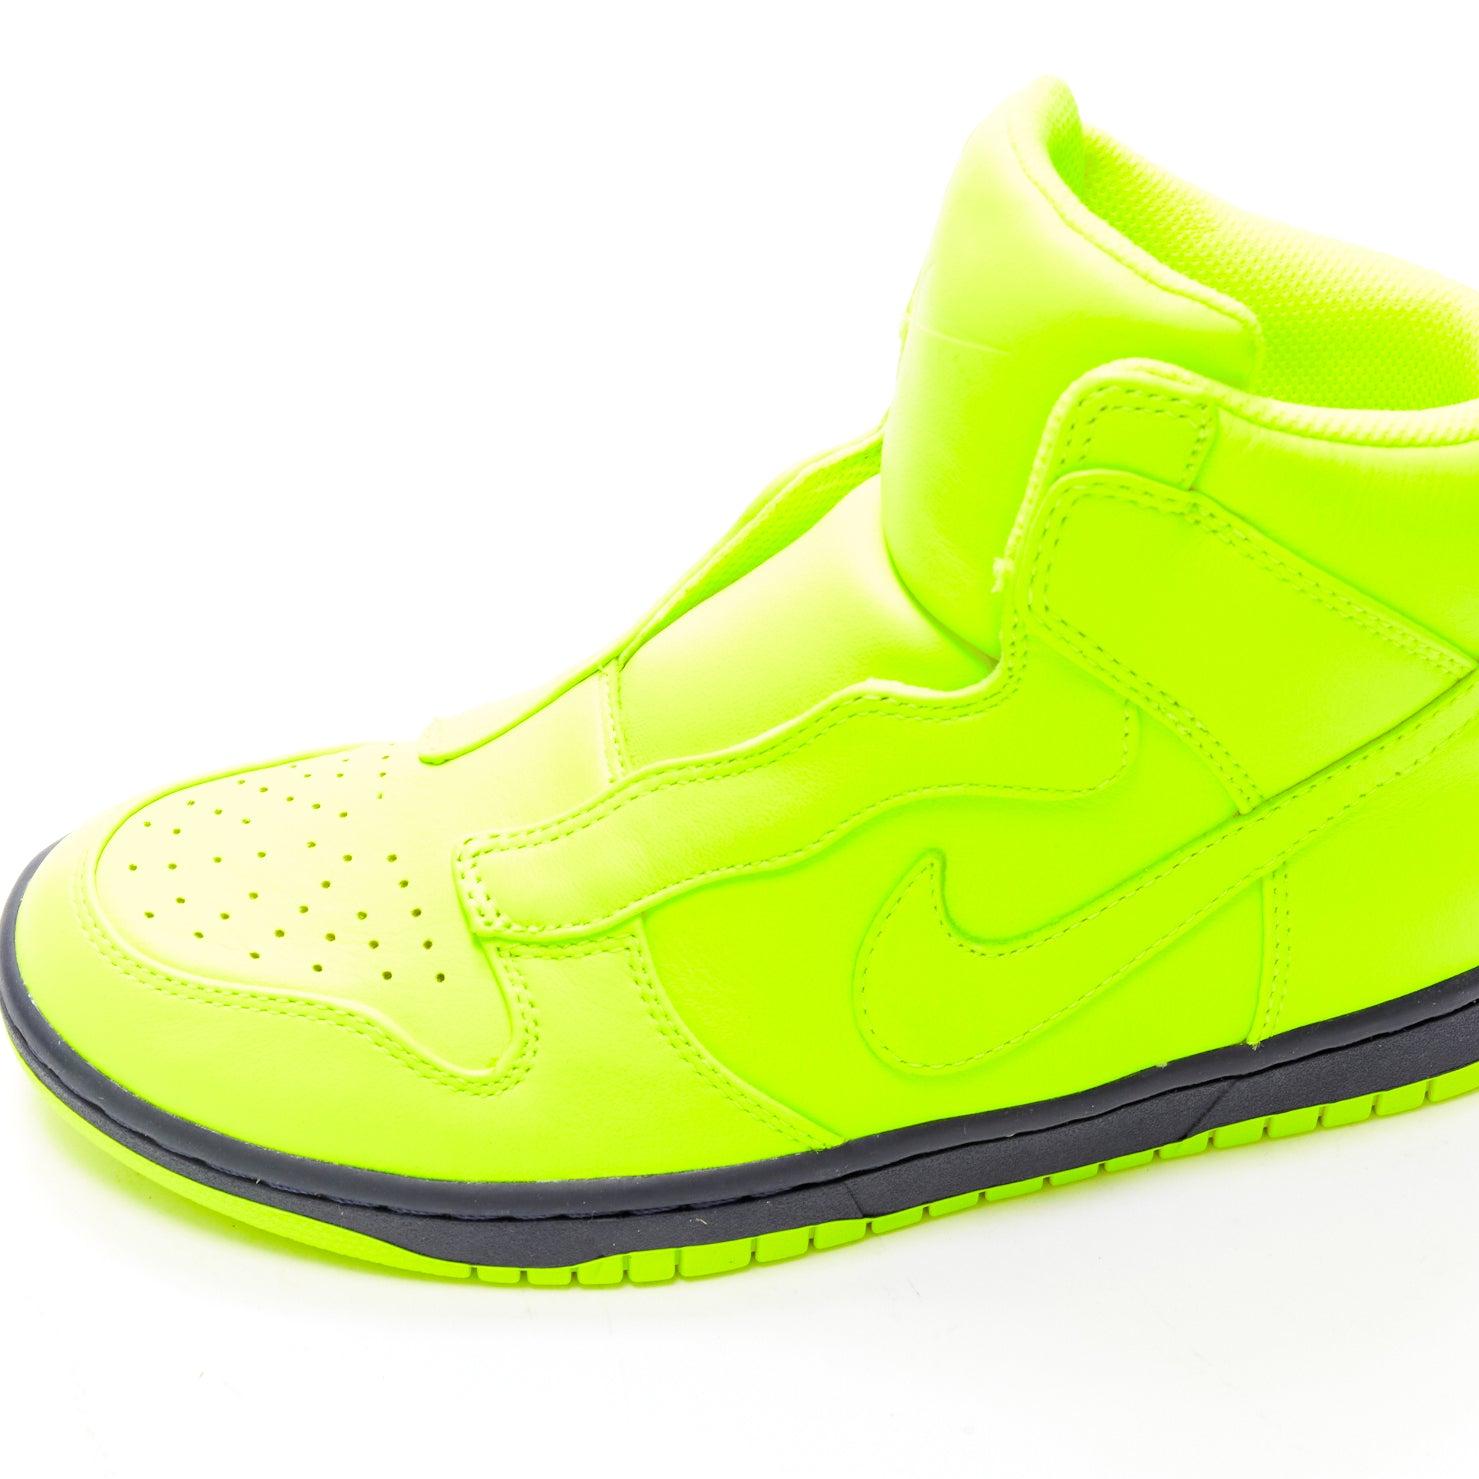 SACAI NIKE NIKELAB Dunk Lux SP Volt neon yellow high top sneakers US8 EU38 4